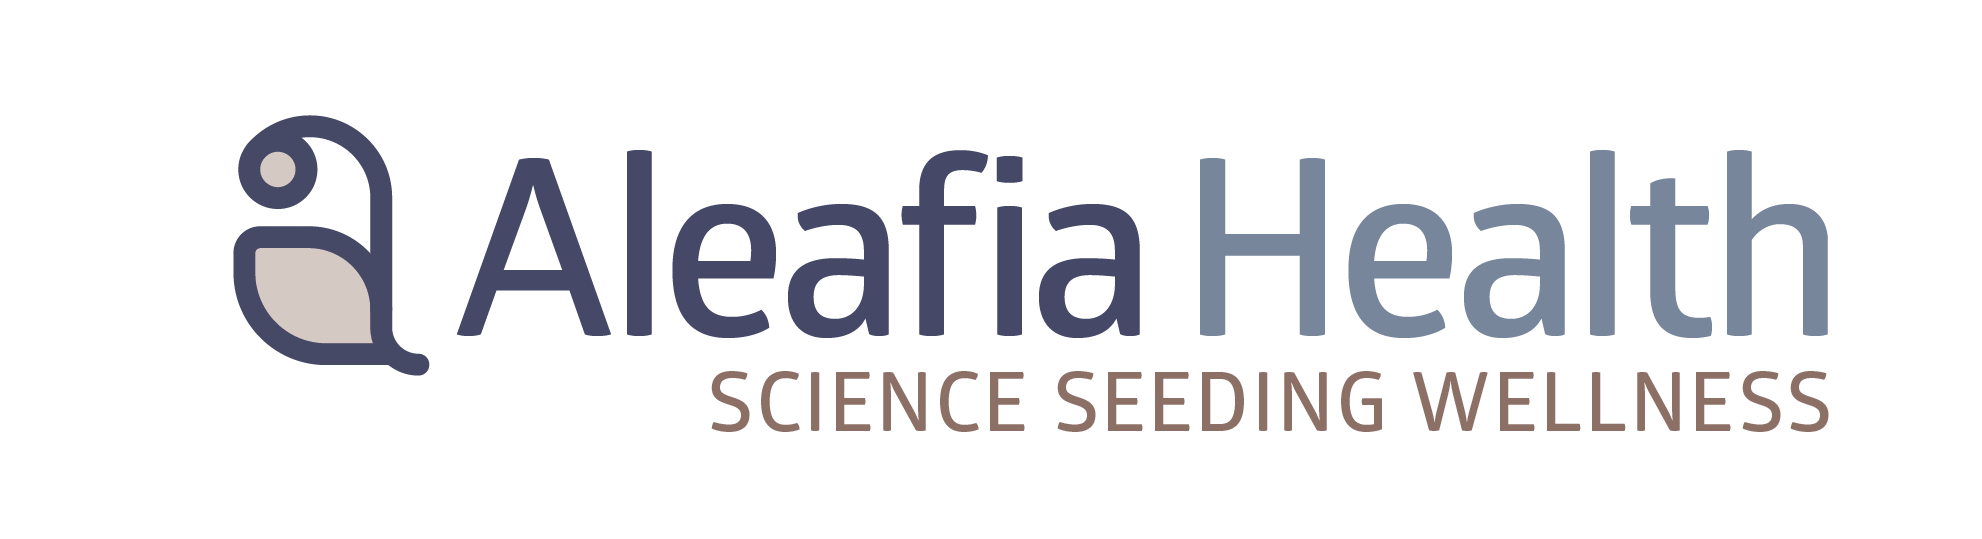 Aleafia Health Inc. and Emblem Cannabis Corporation Announce Settlement of Claim